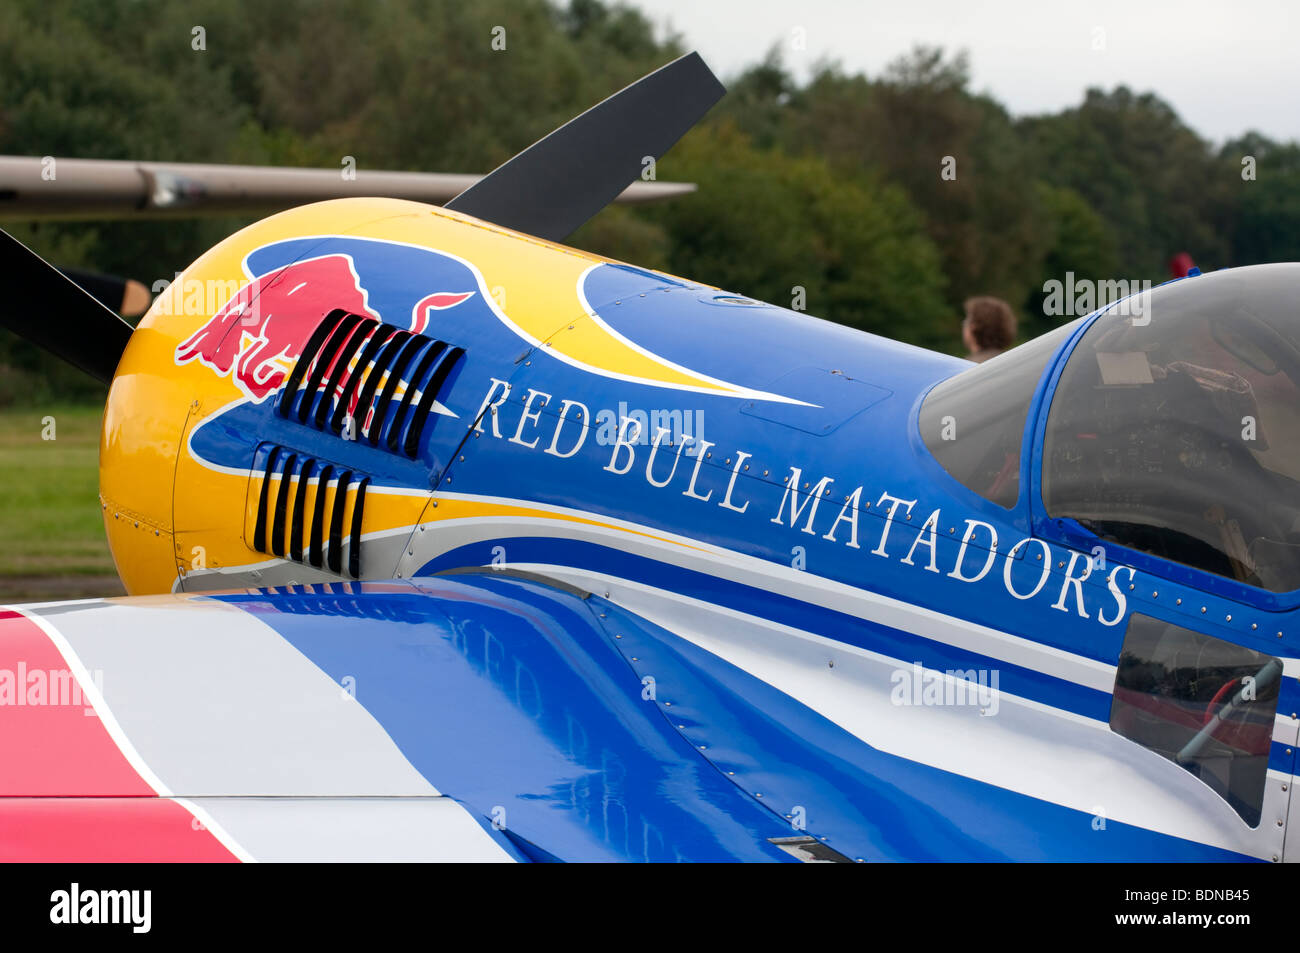 Red Bull Matadore Aerial Display team Stockfoto